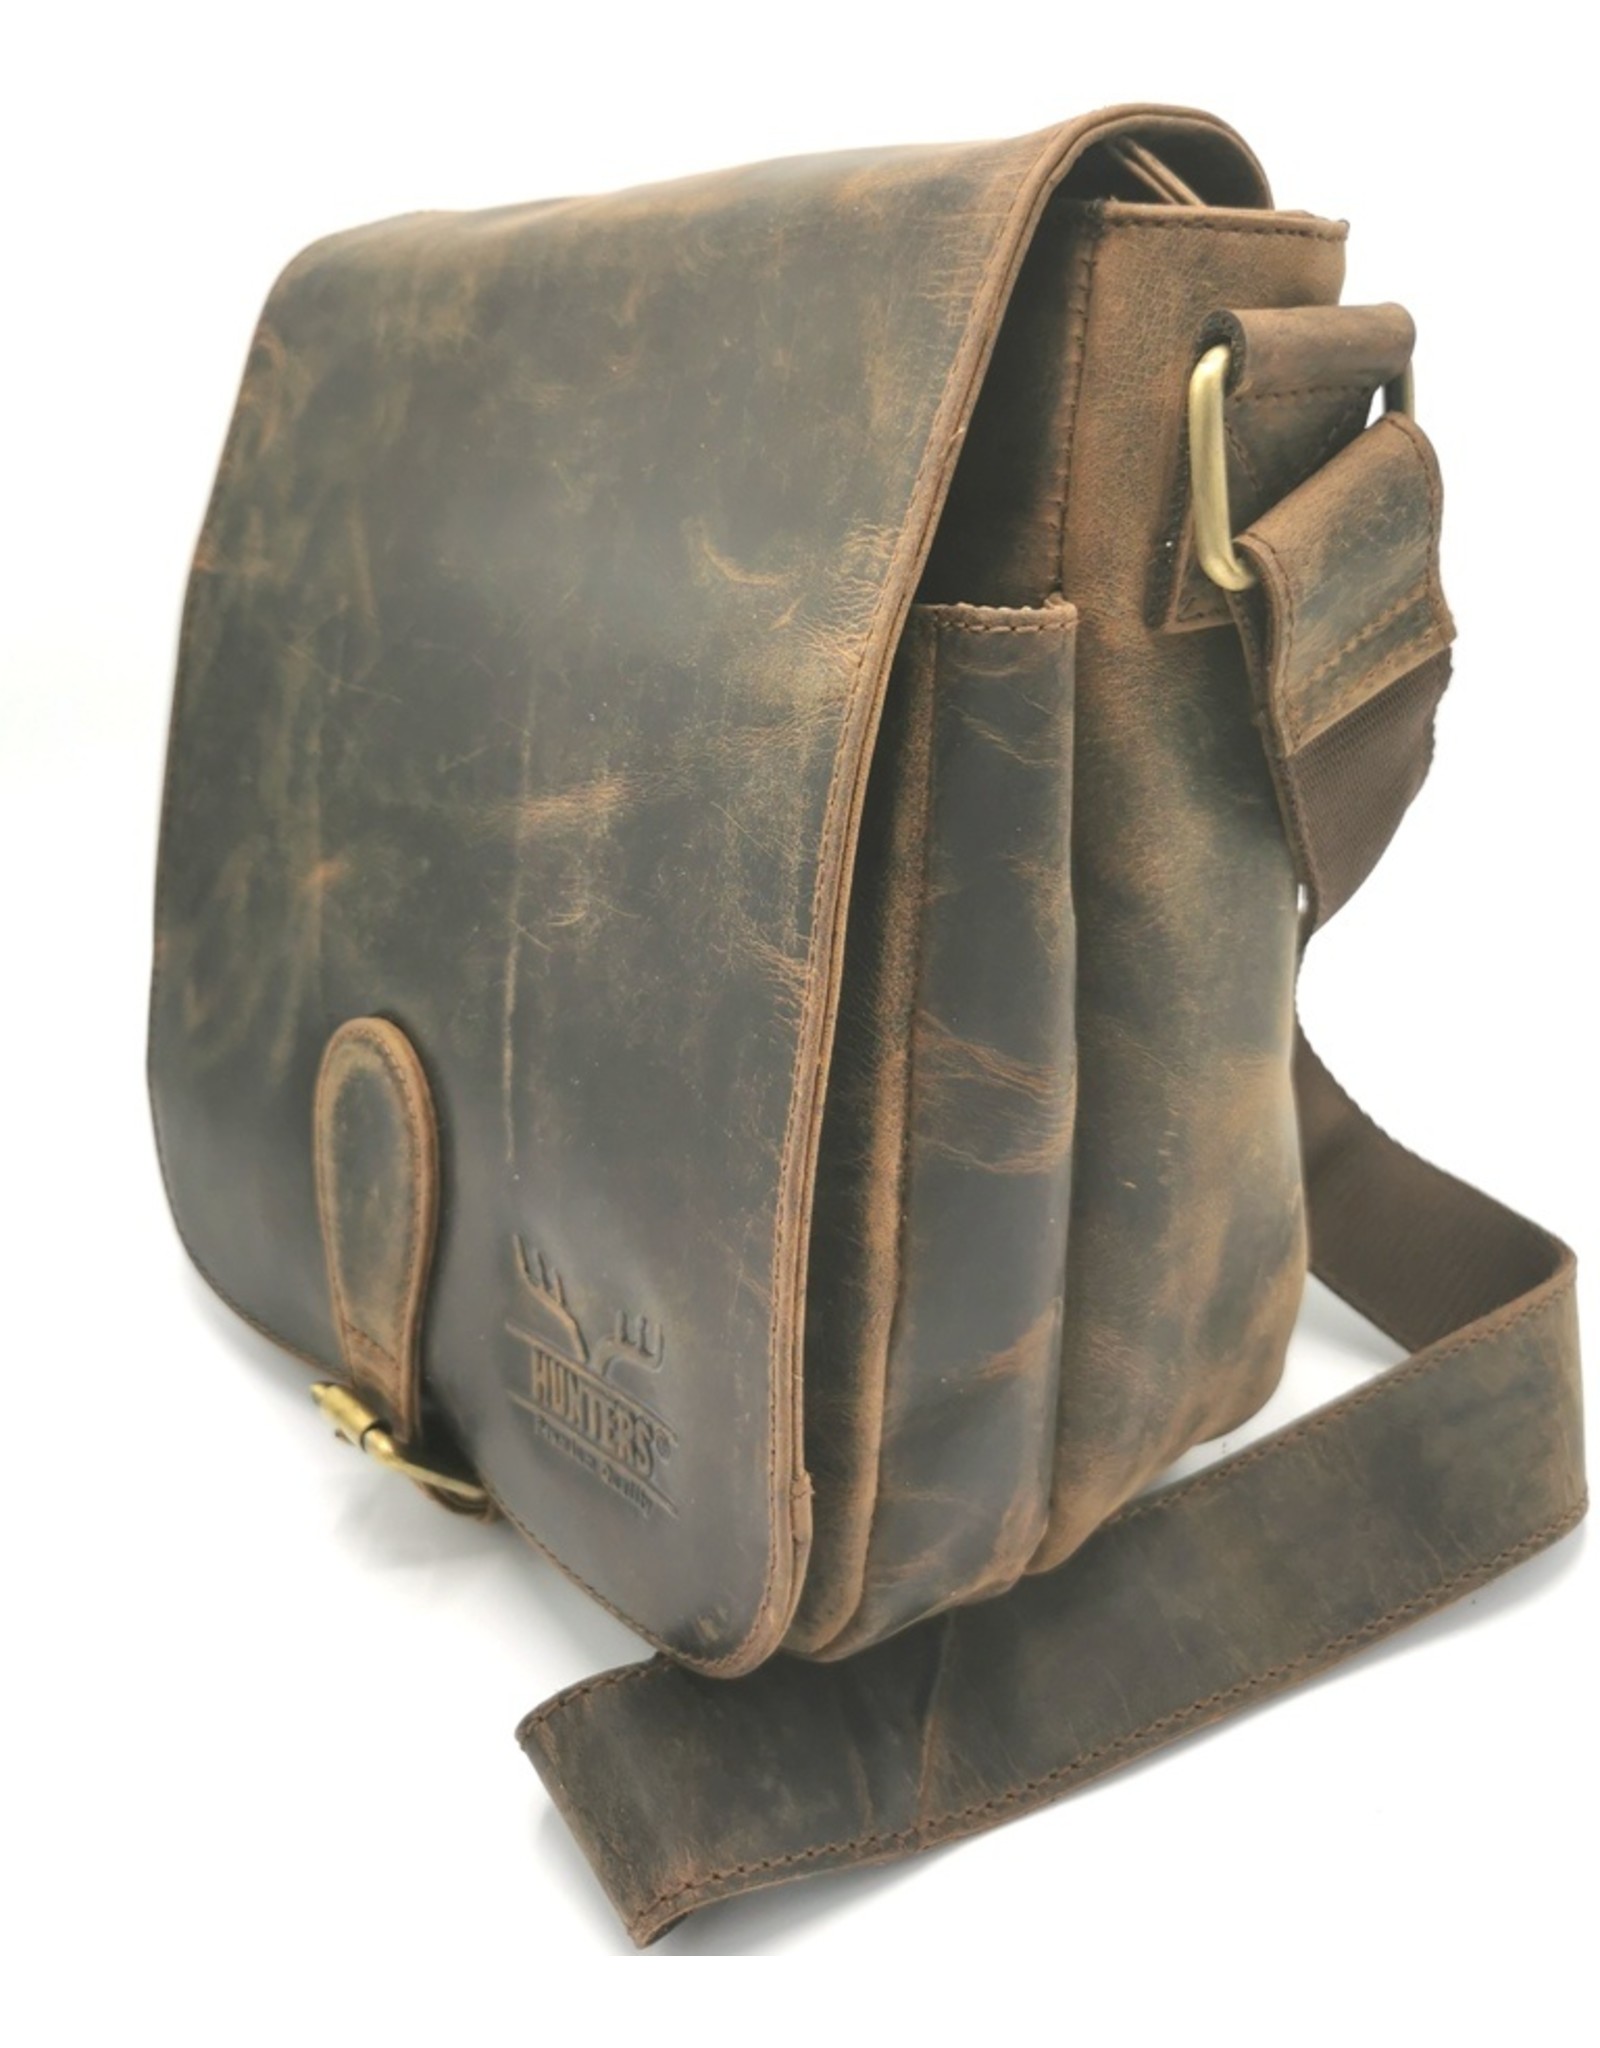 Hunters Leather Shoulder bags - Hunters Saddle bag Buffalo leather